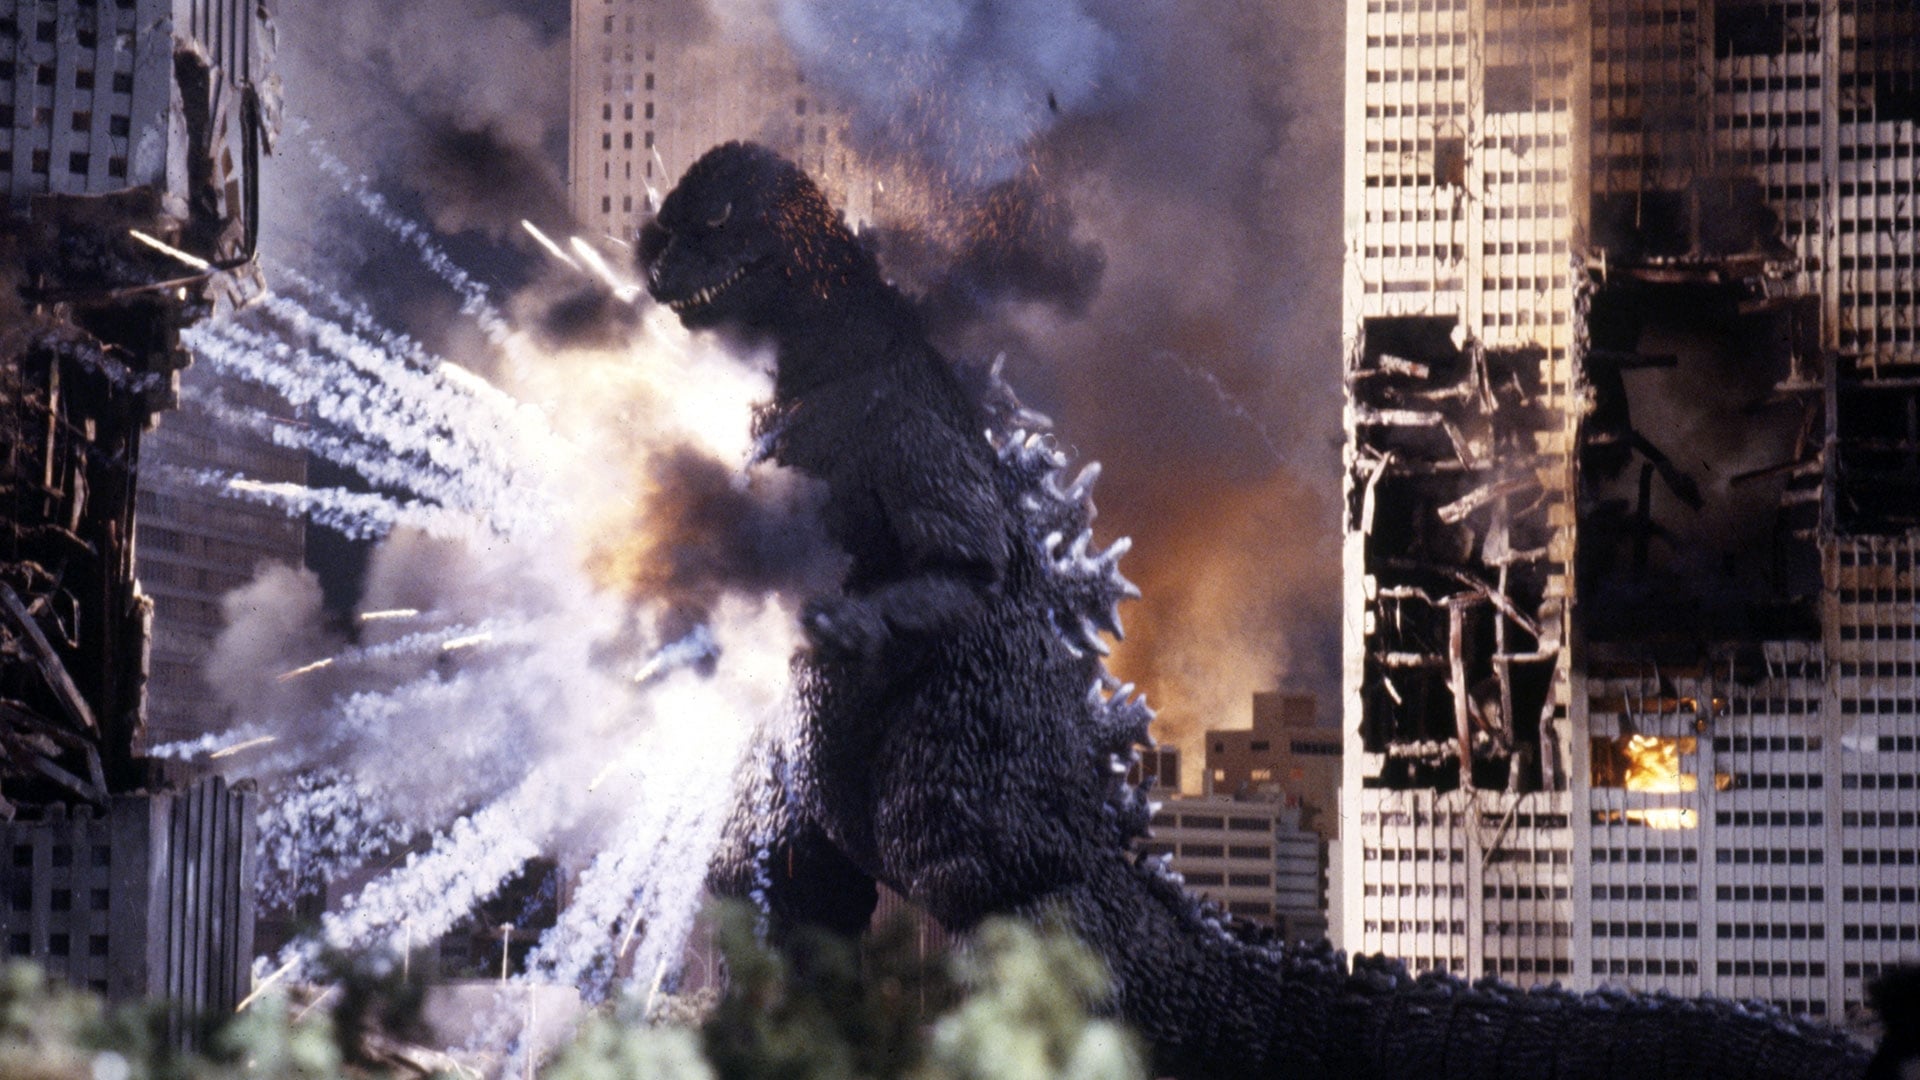 Le Retour de Godzilla